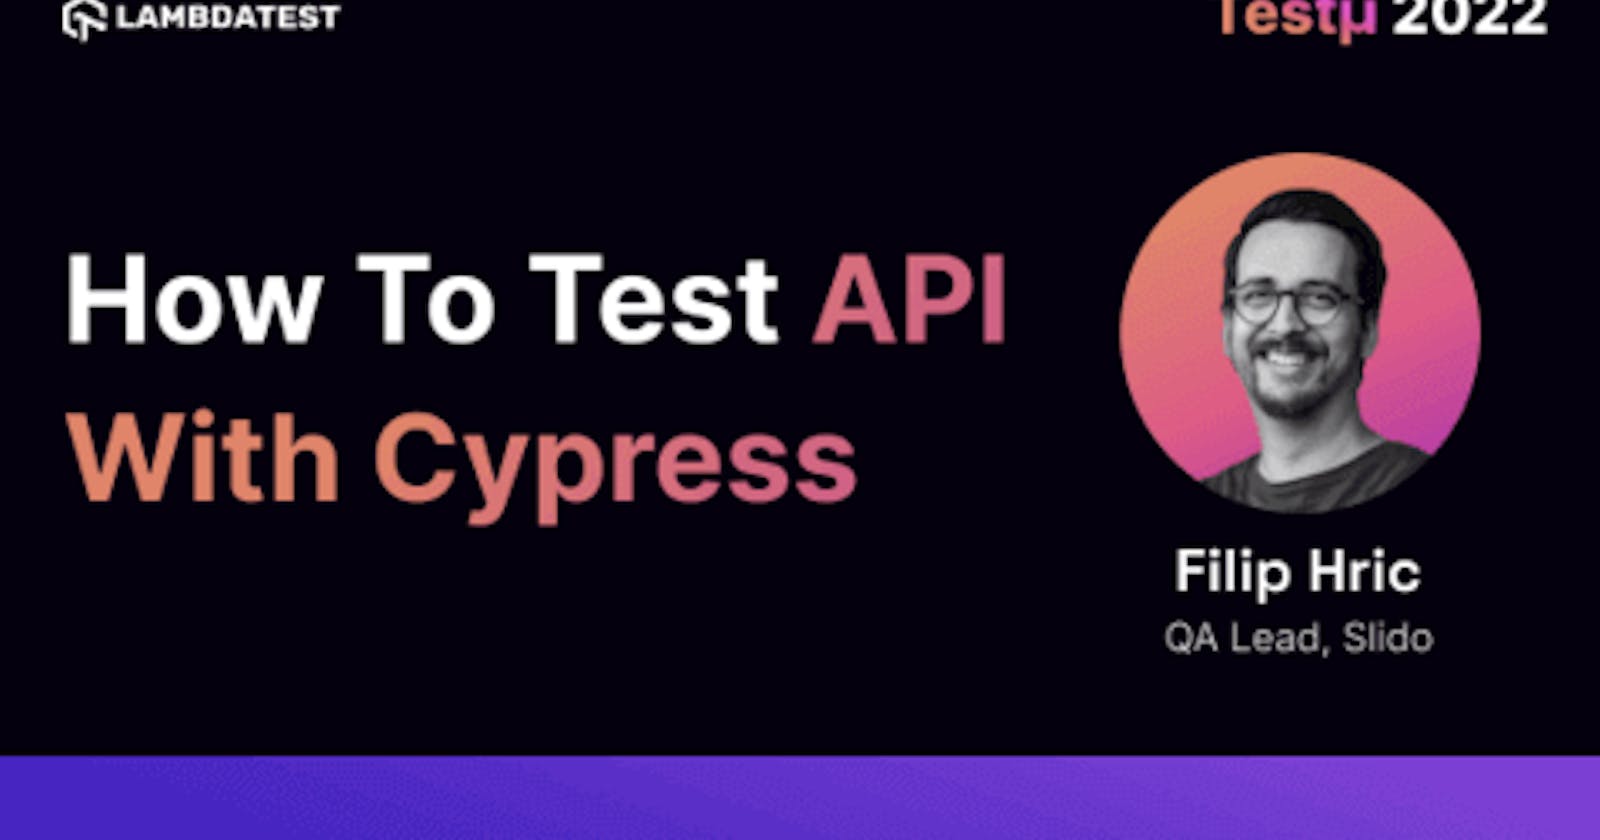 How To Test API With Cypress: Filip Hric [Testμ 2022]